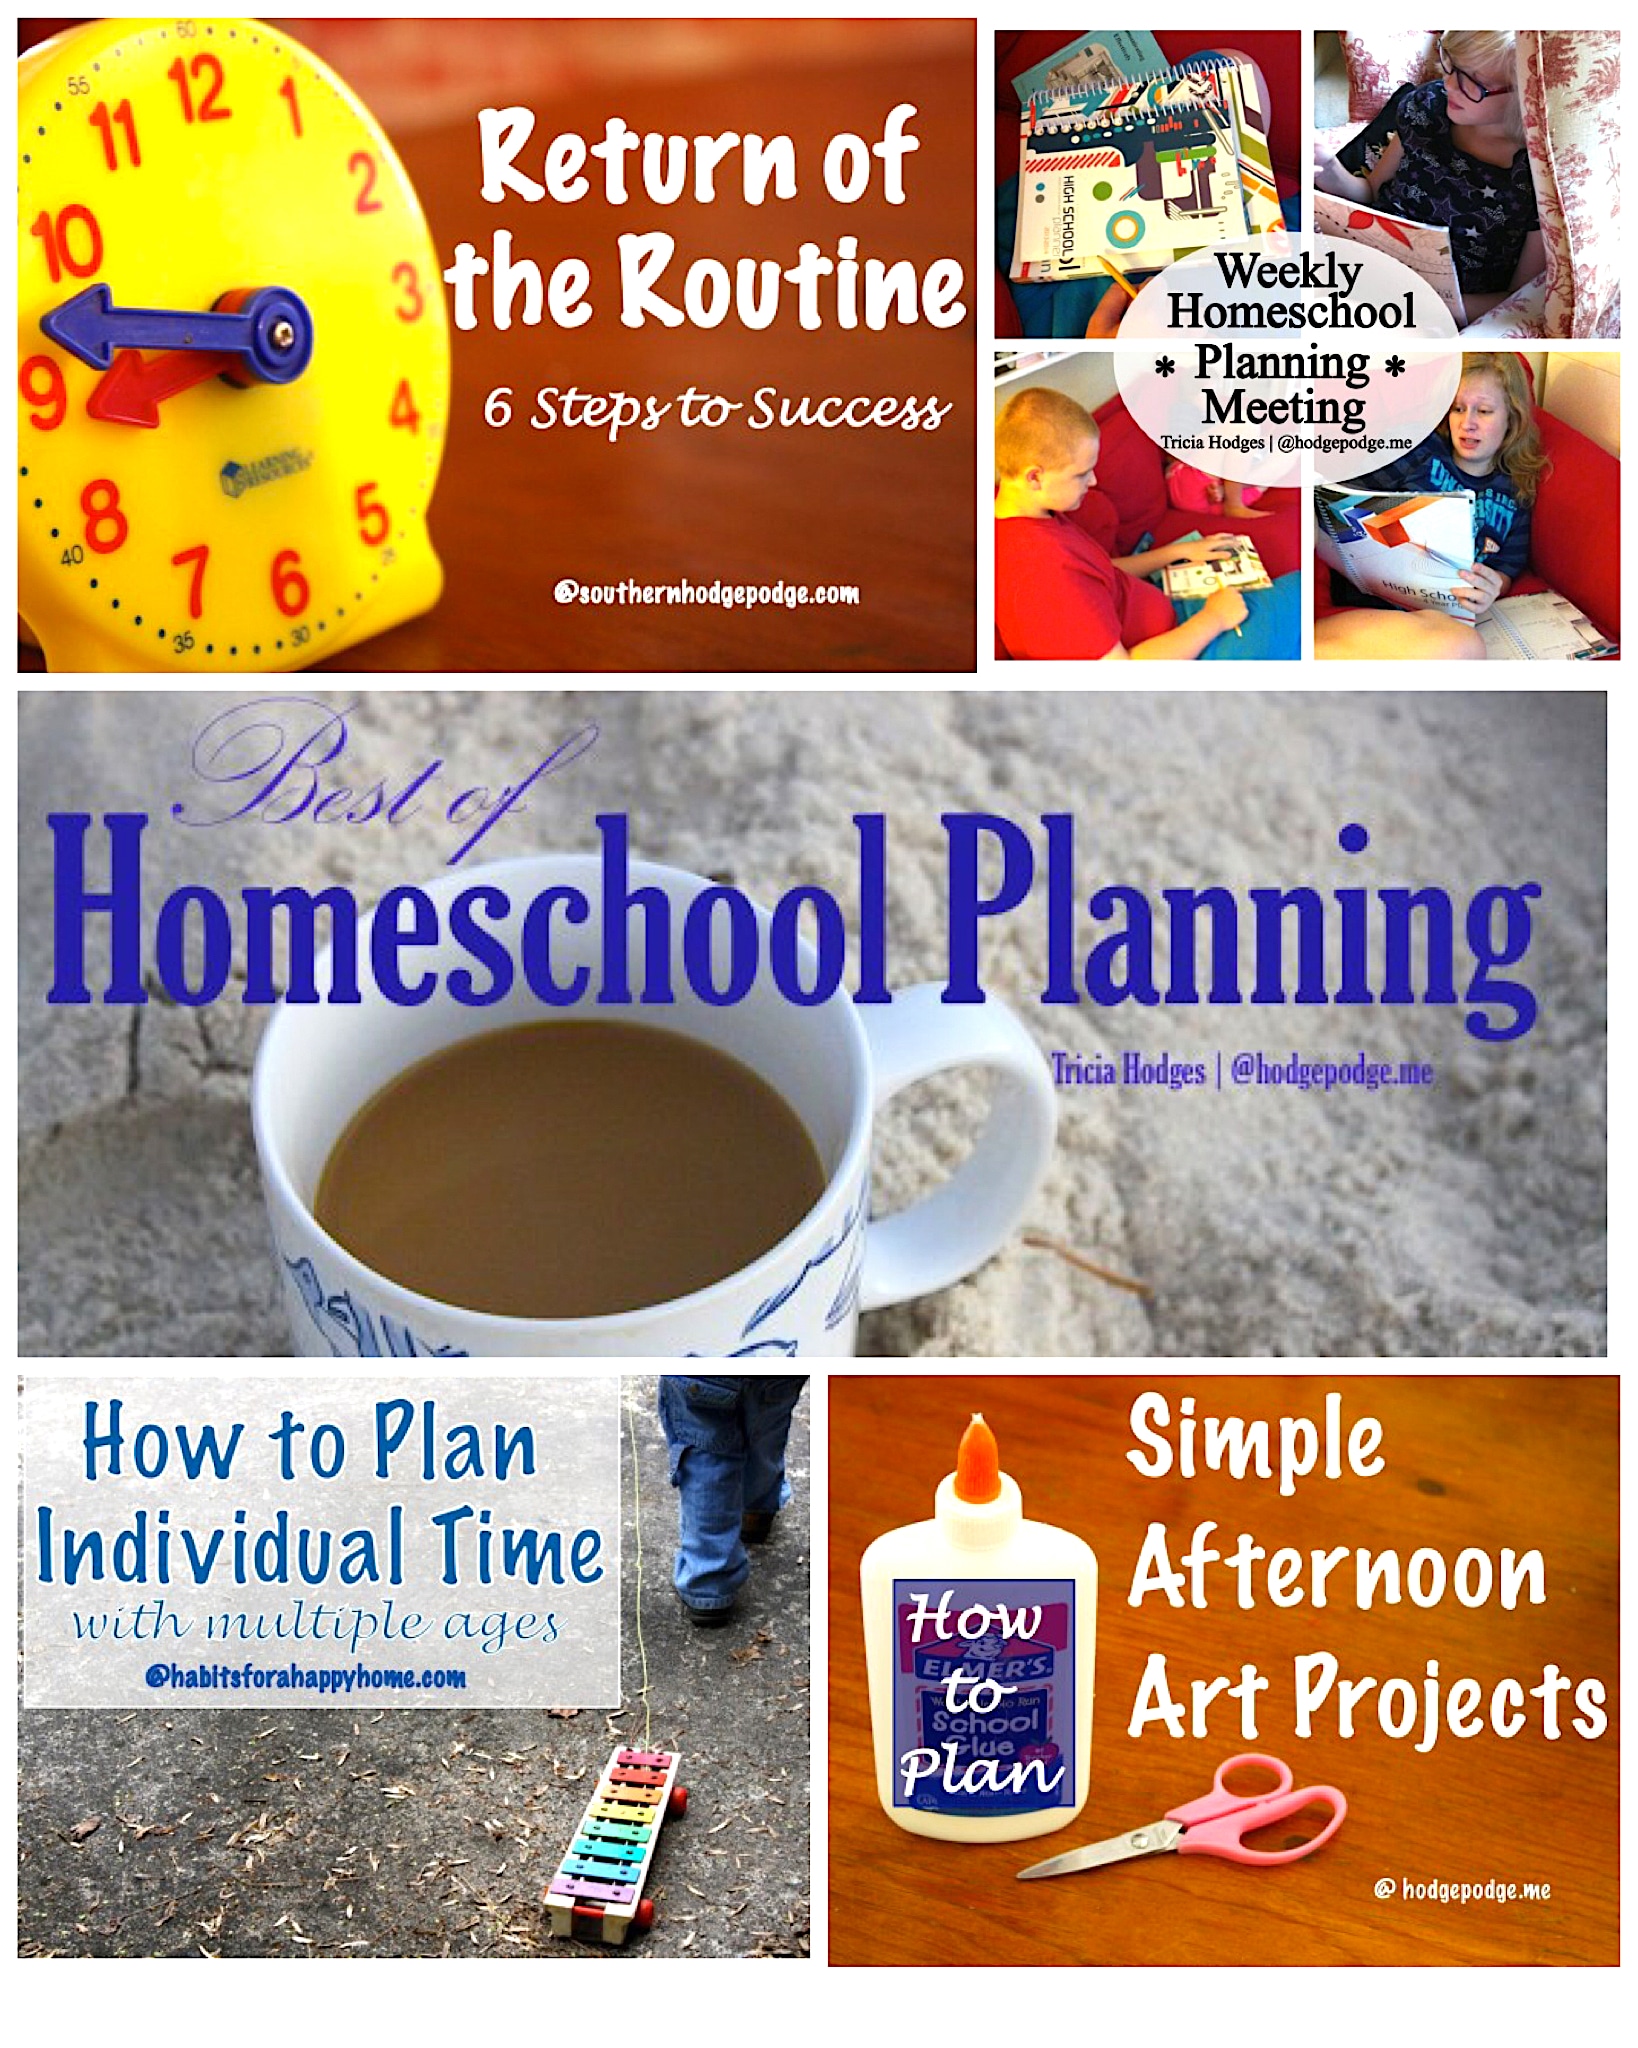 Homeschool Planning at Hodgepodge